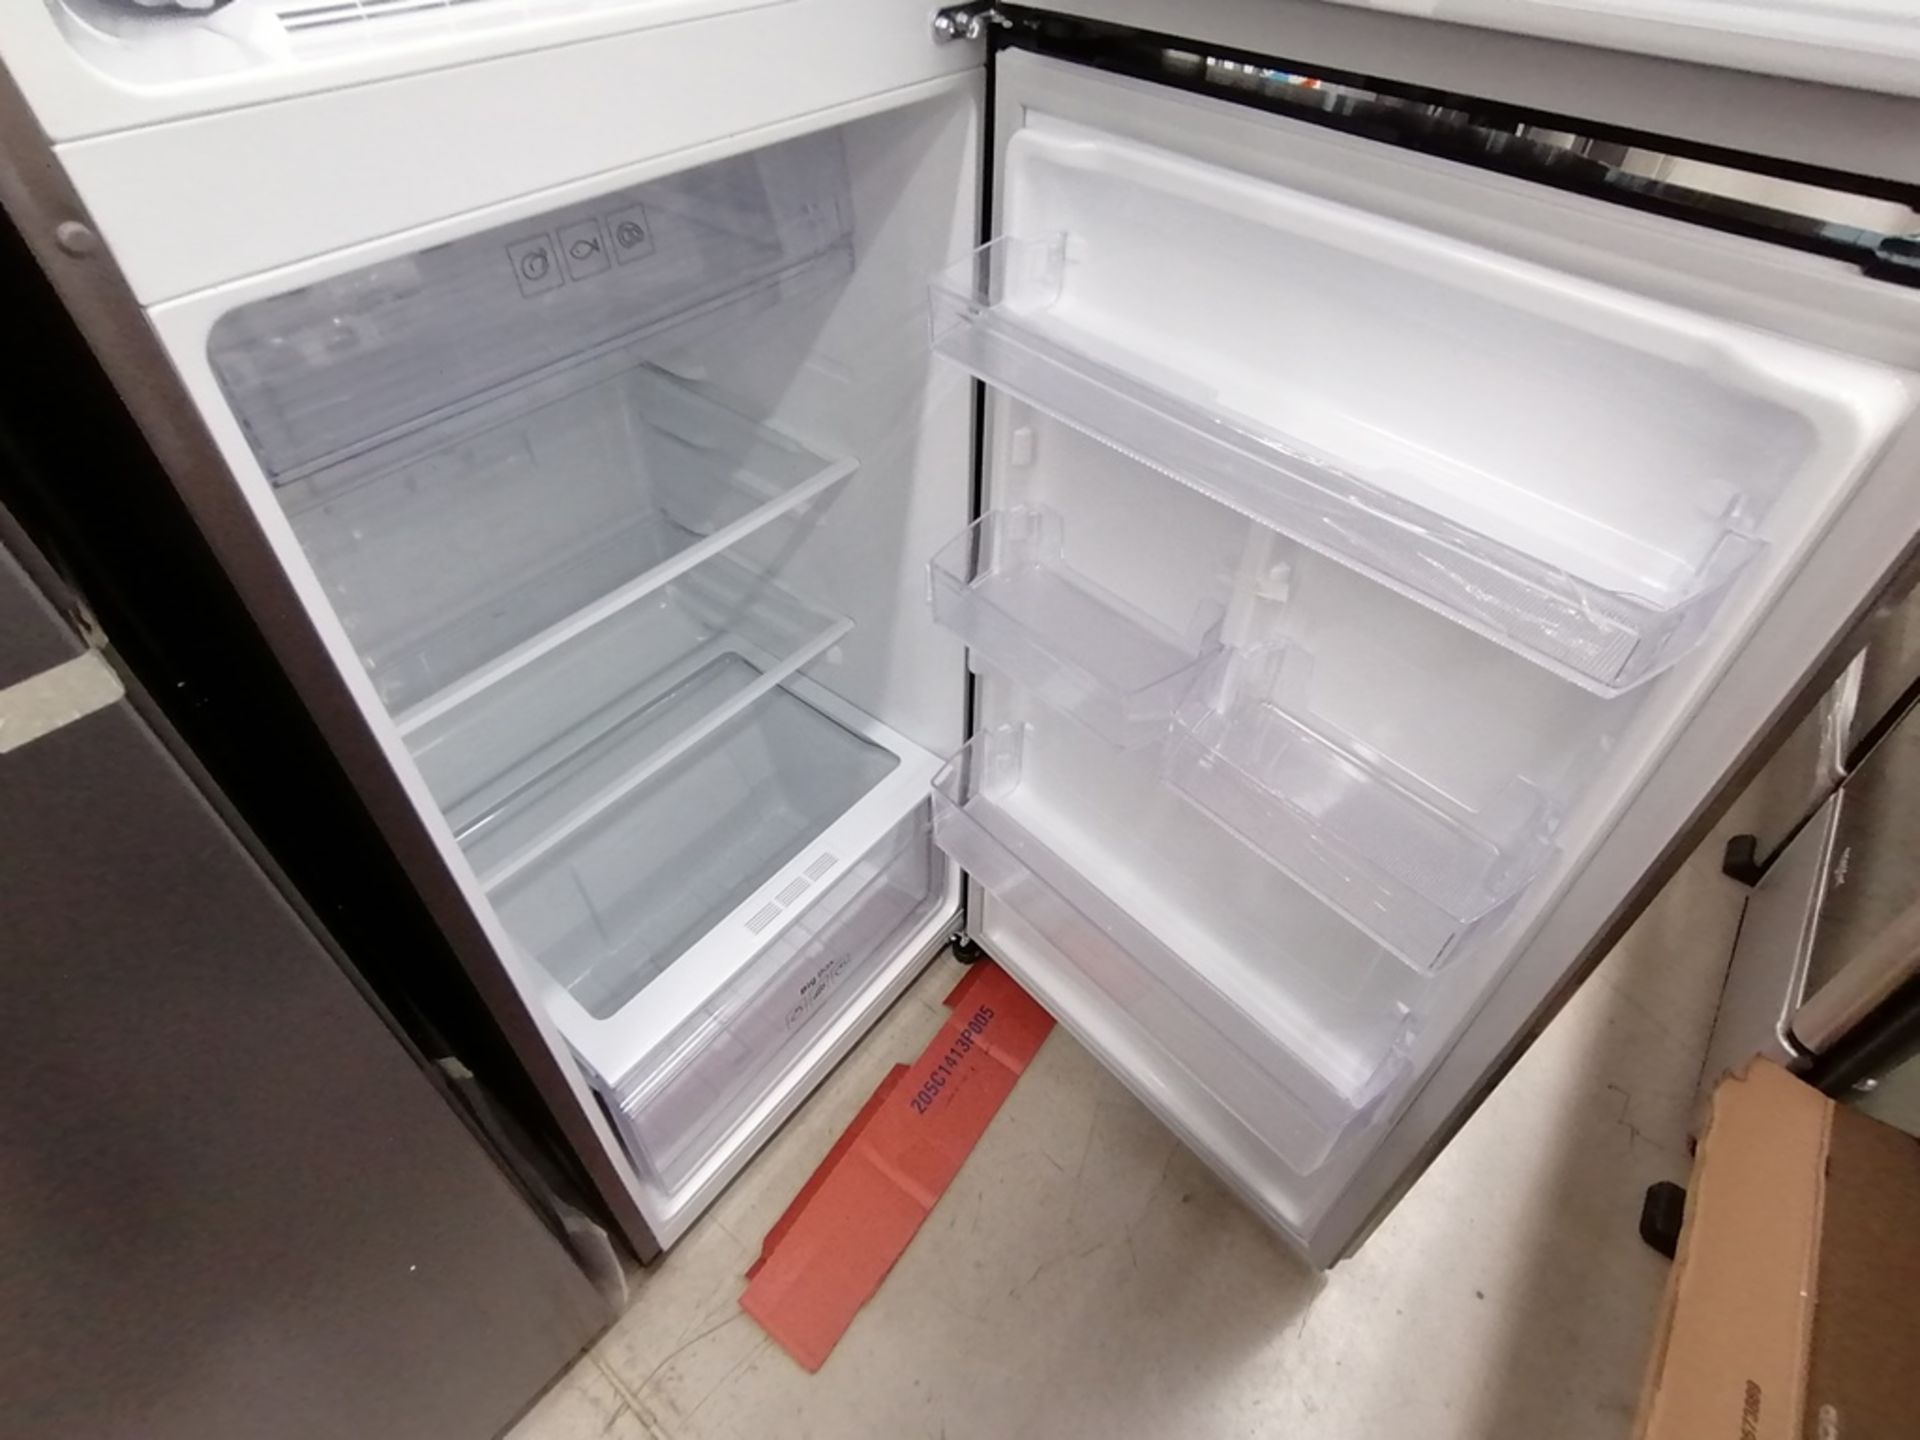 Lote de 2 refrigeradores incluye: 1 Refrigerador, Marca Samsung, Modelo RT29K500JS8, Serie 0AZS4BAR - Image 6 of 16